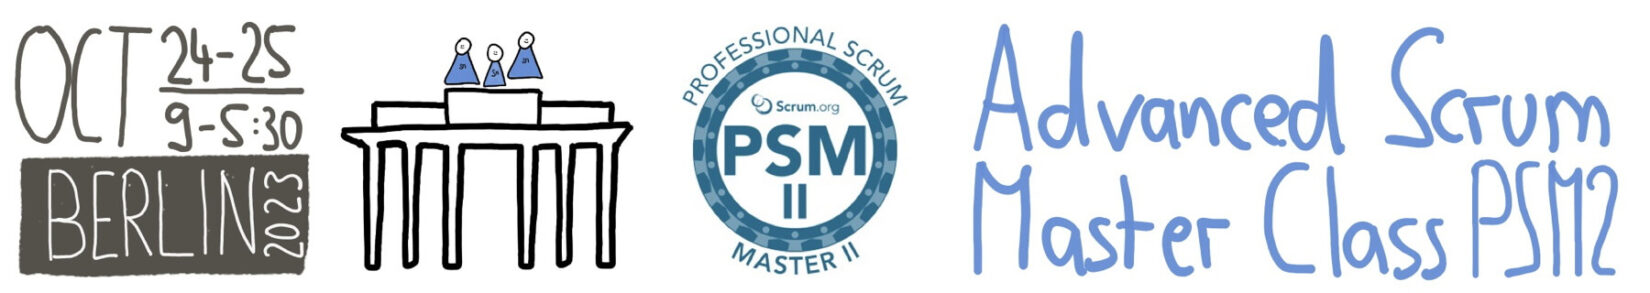 Advanced Professional Scrum Master Training in Berlin w/ PSM II Certificate — October 24-25, 2023 — Berlin-Product-People.com